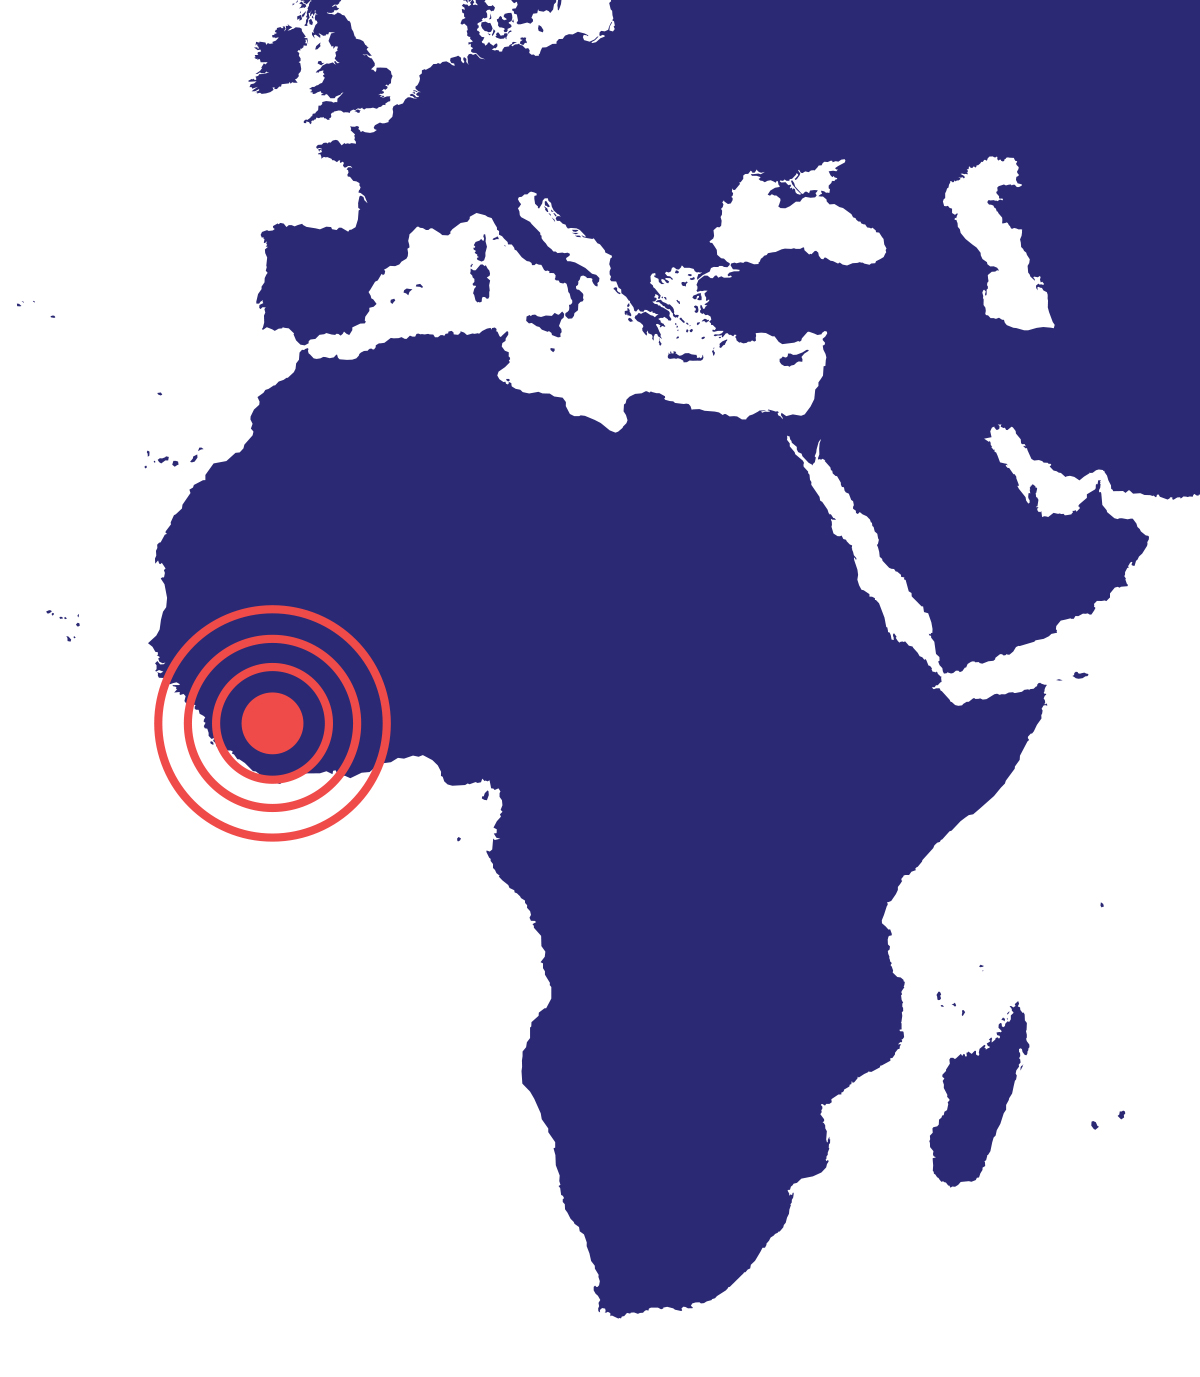 Illustration of map with orange circle highlighting Africa